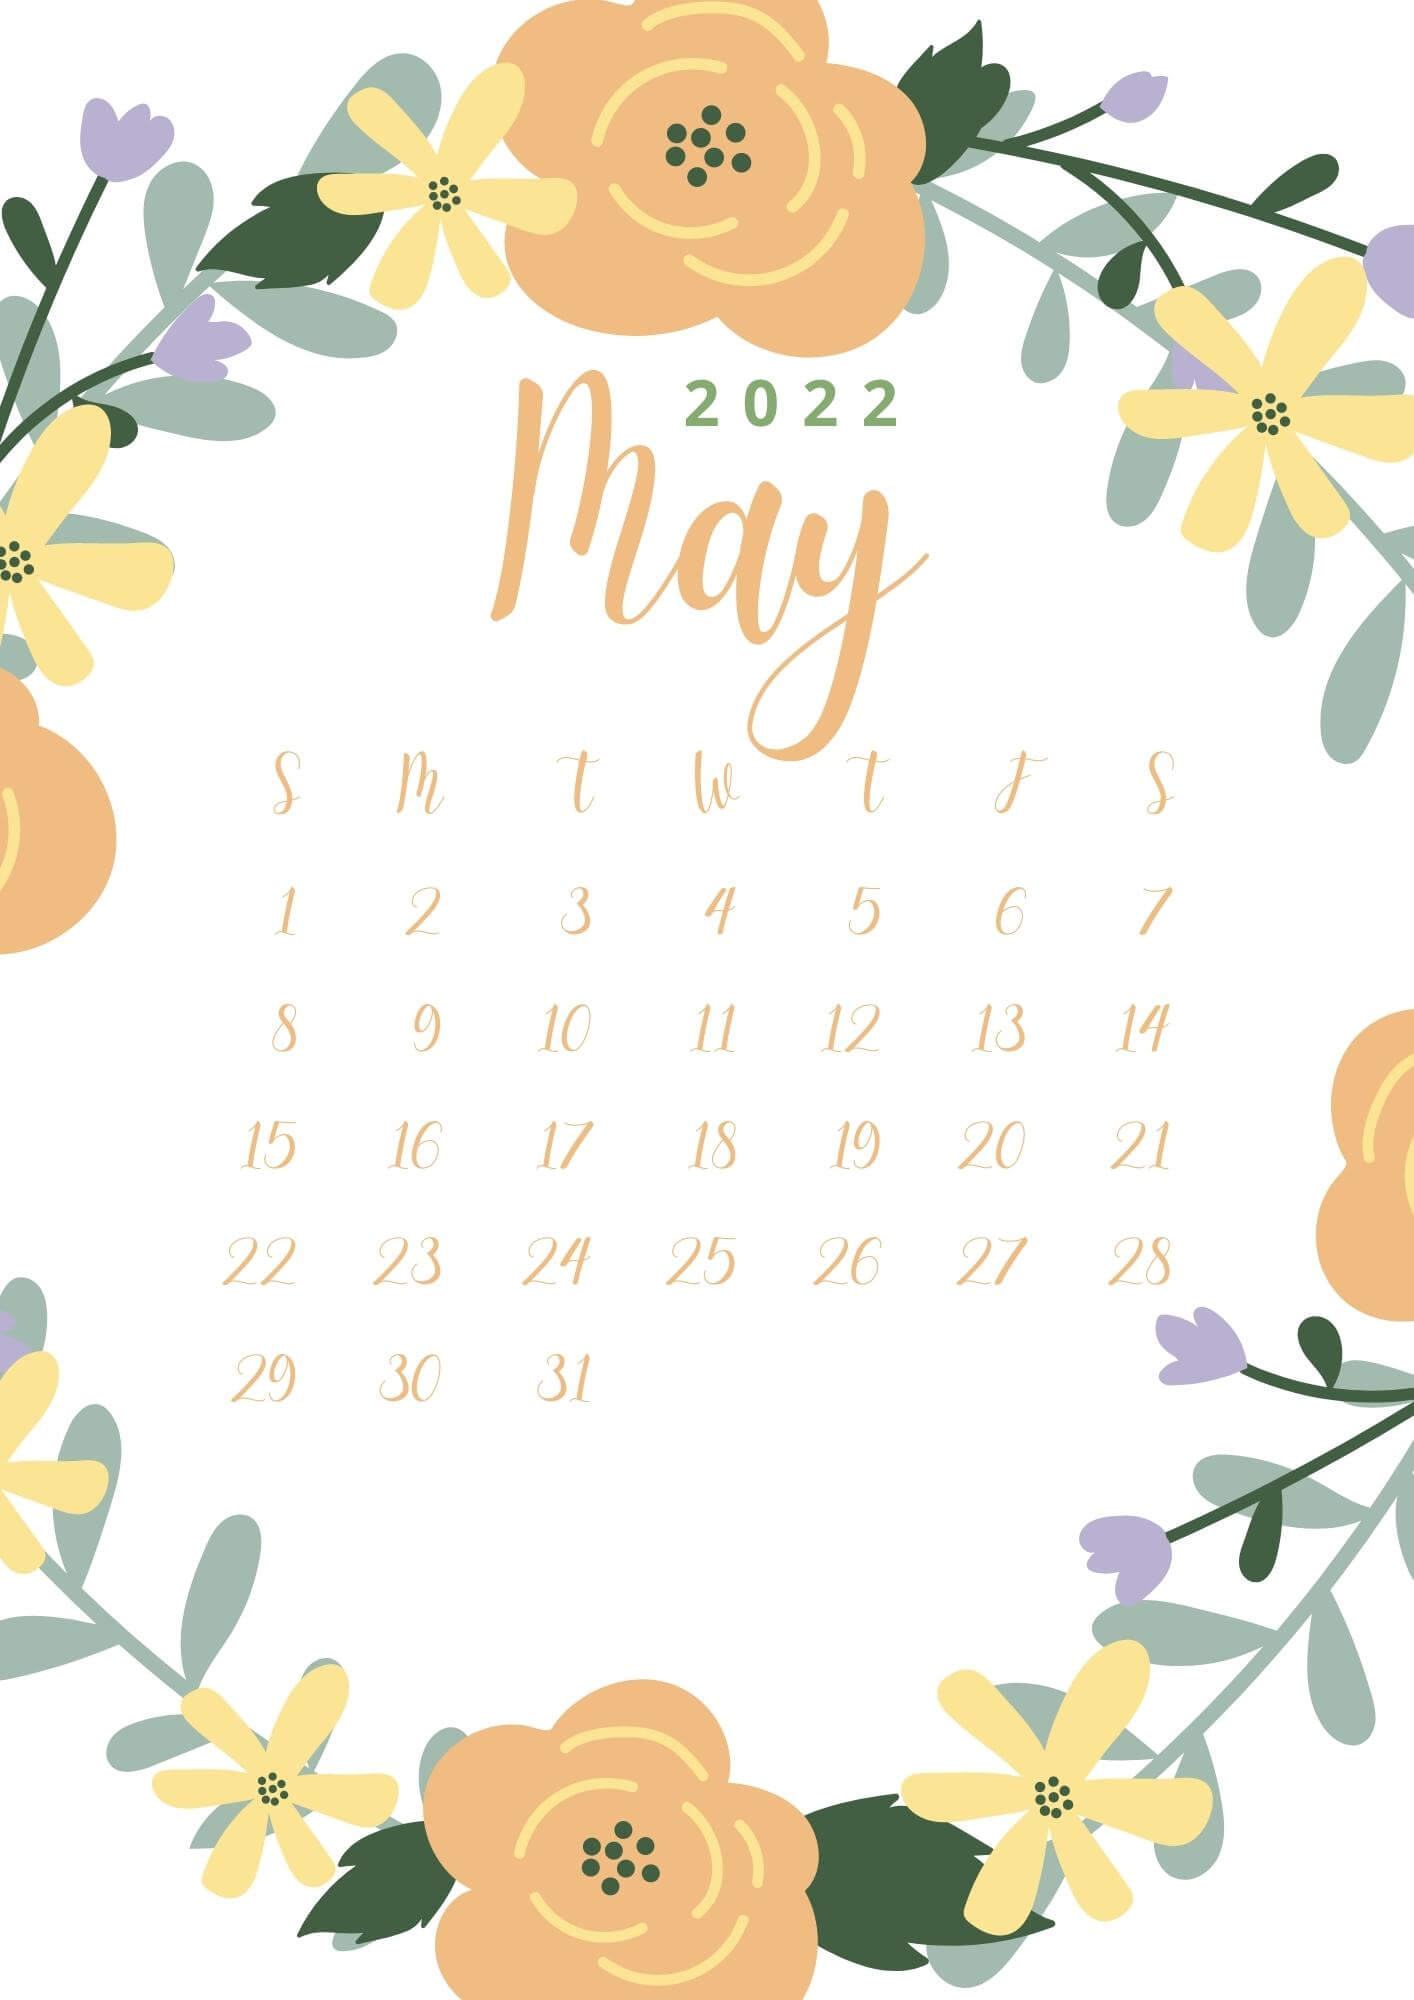 May 2022 Floral Calendar Image